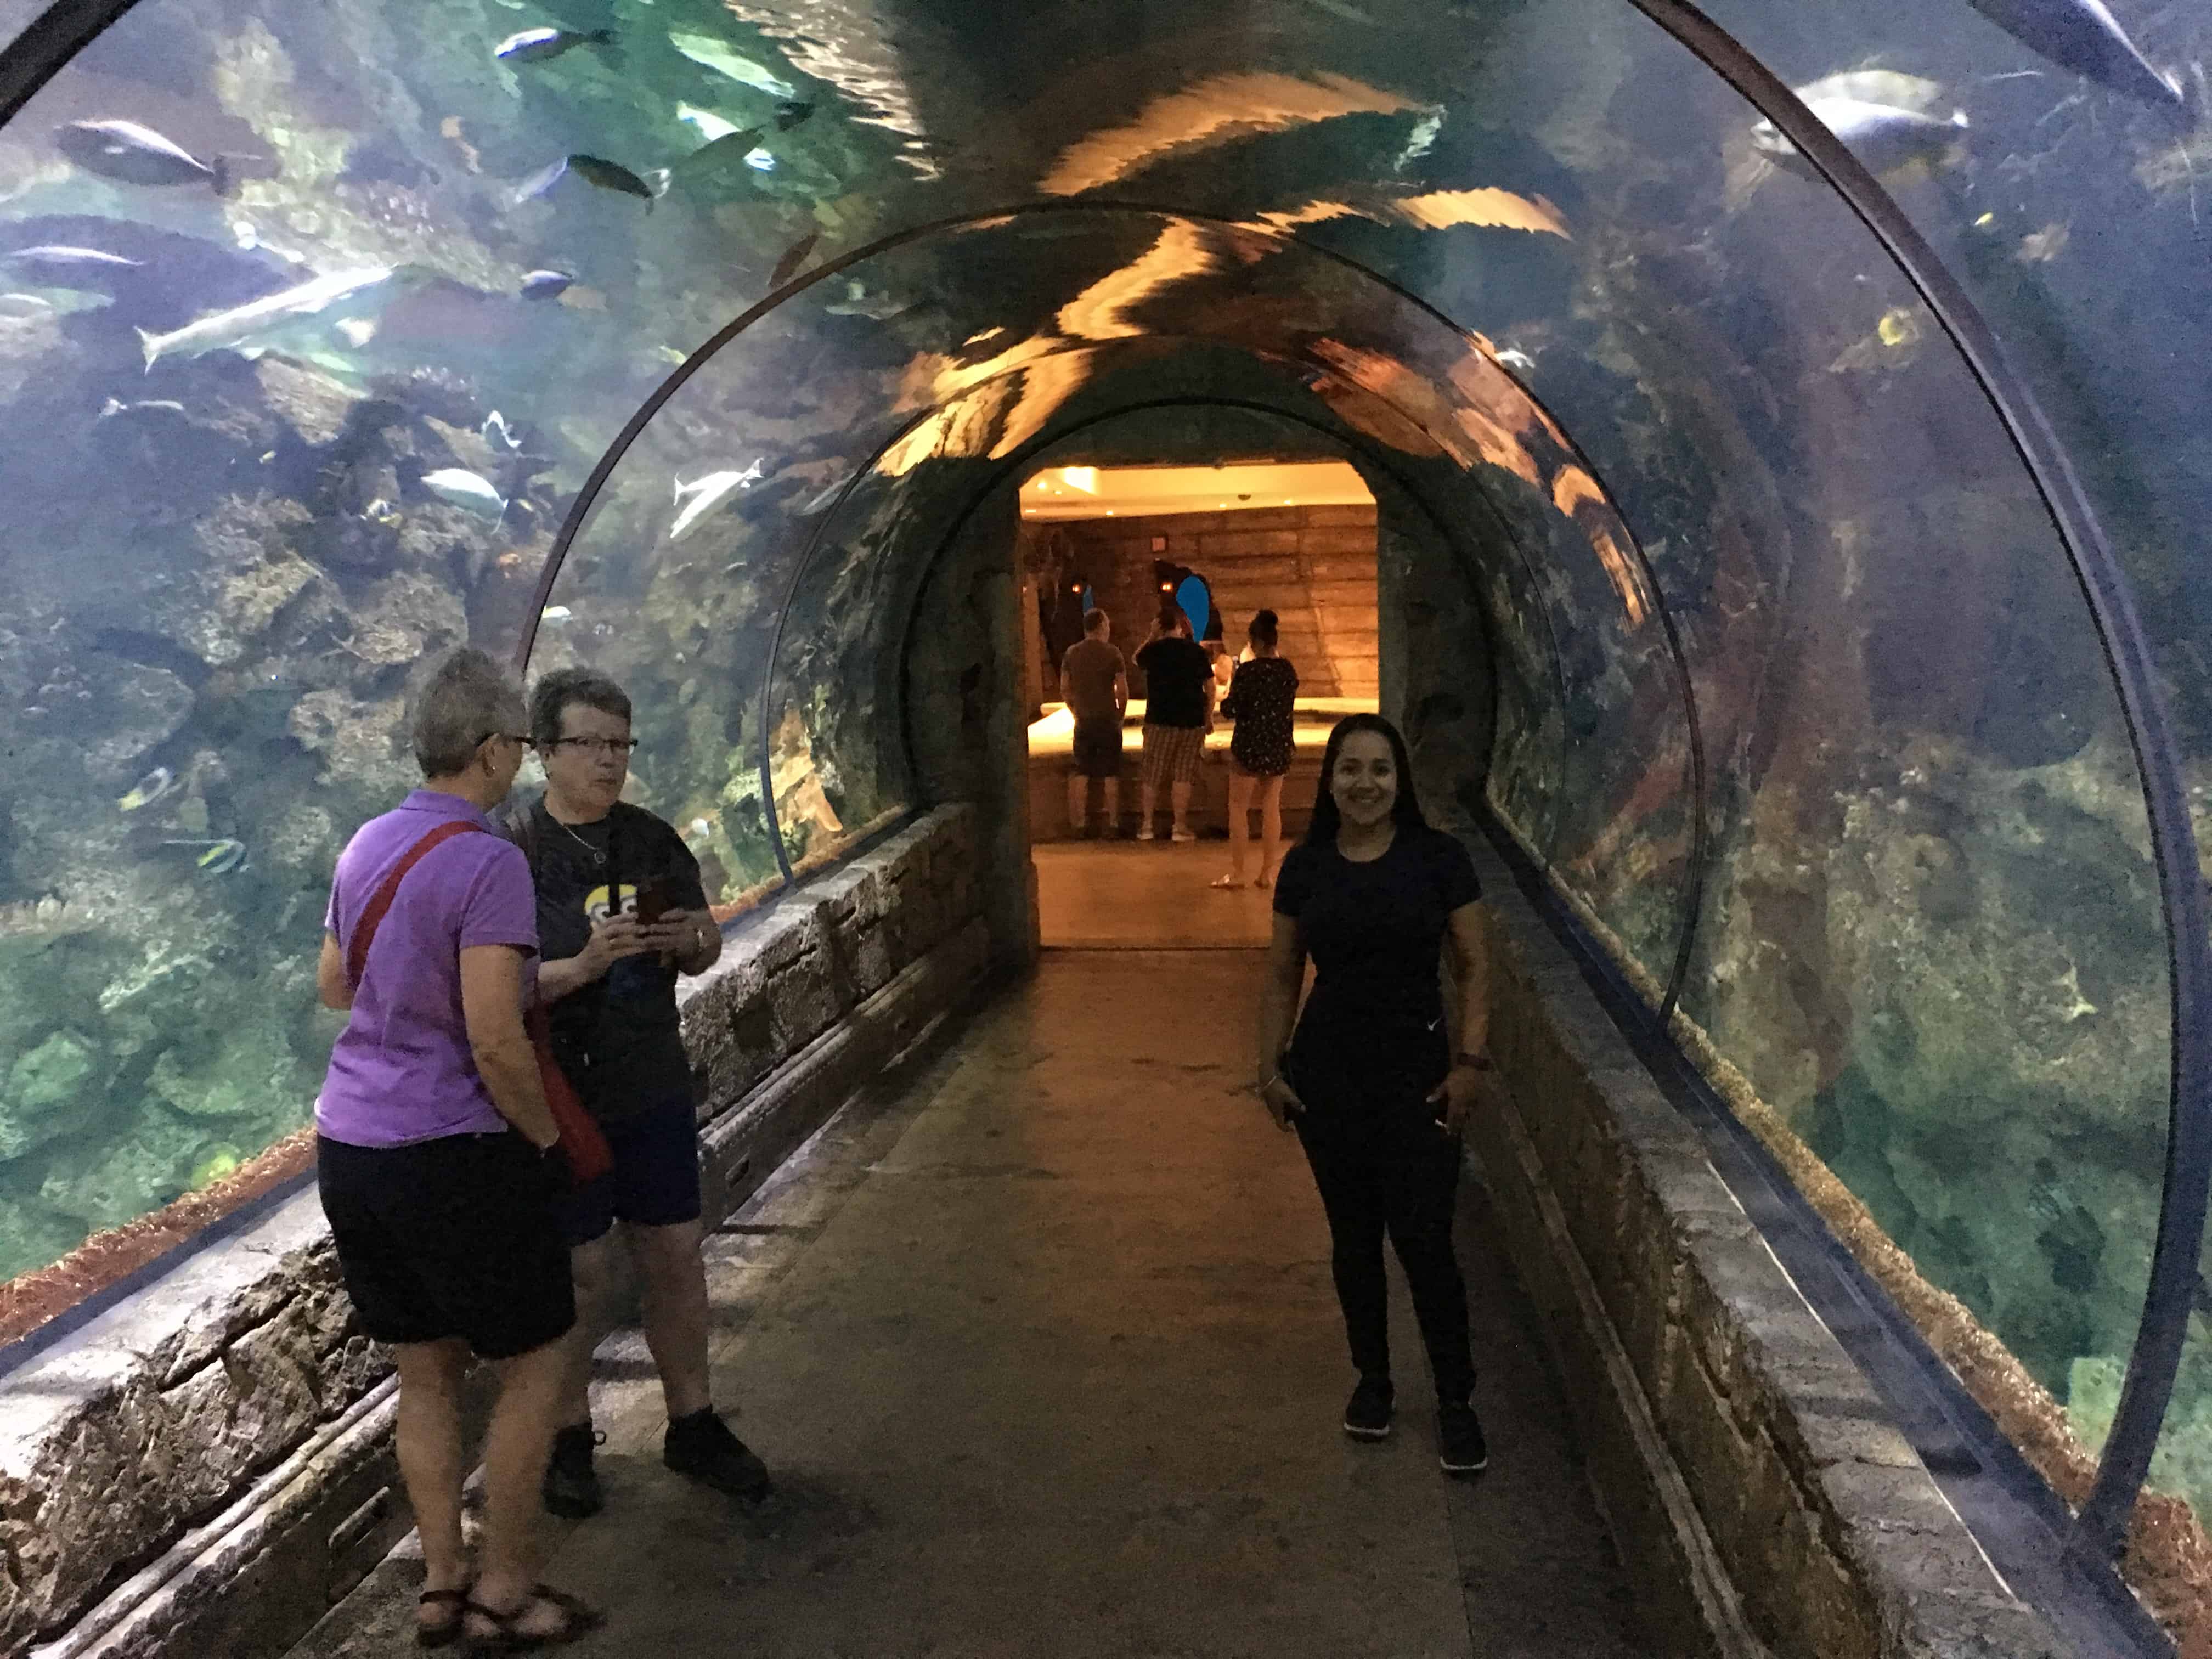 Tunnel at Shark Reef Aquarium at Mandalay Bay, Las Vegas, Nevada